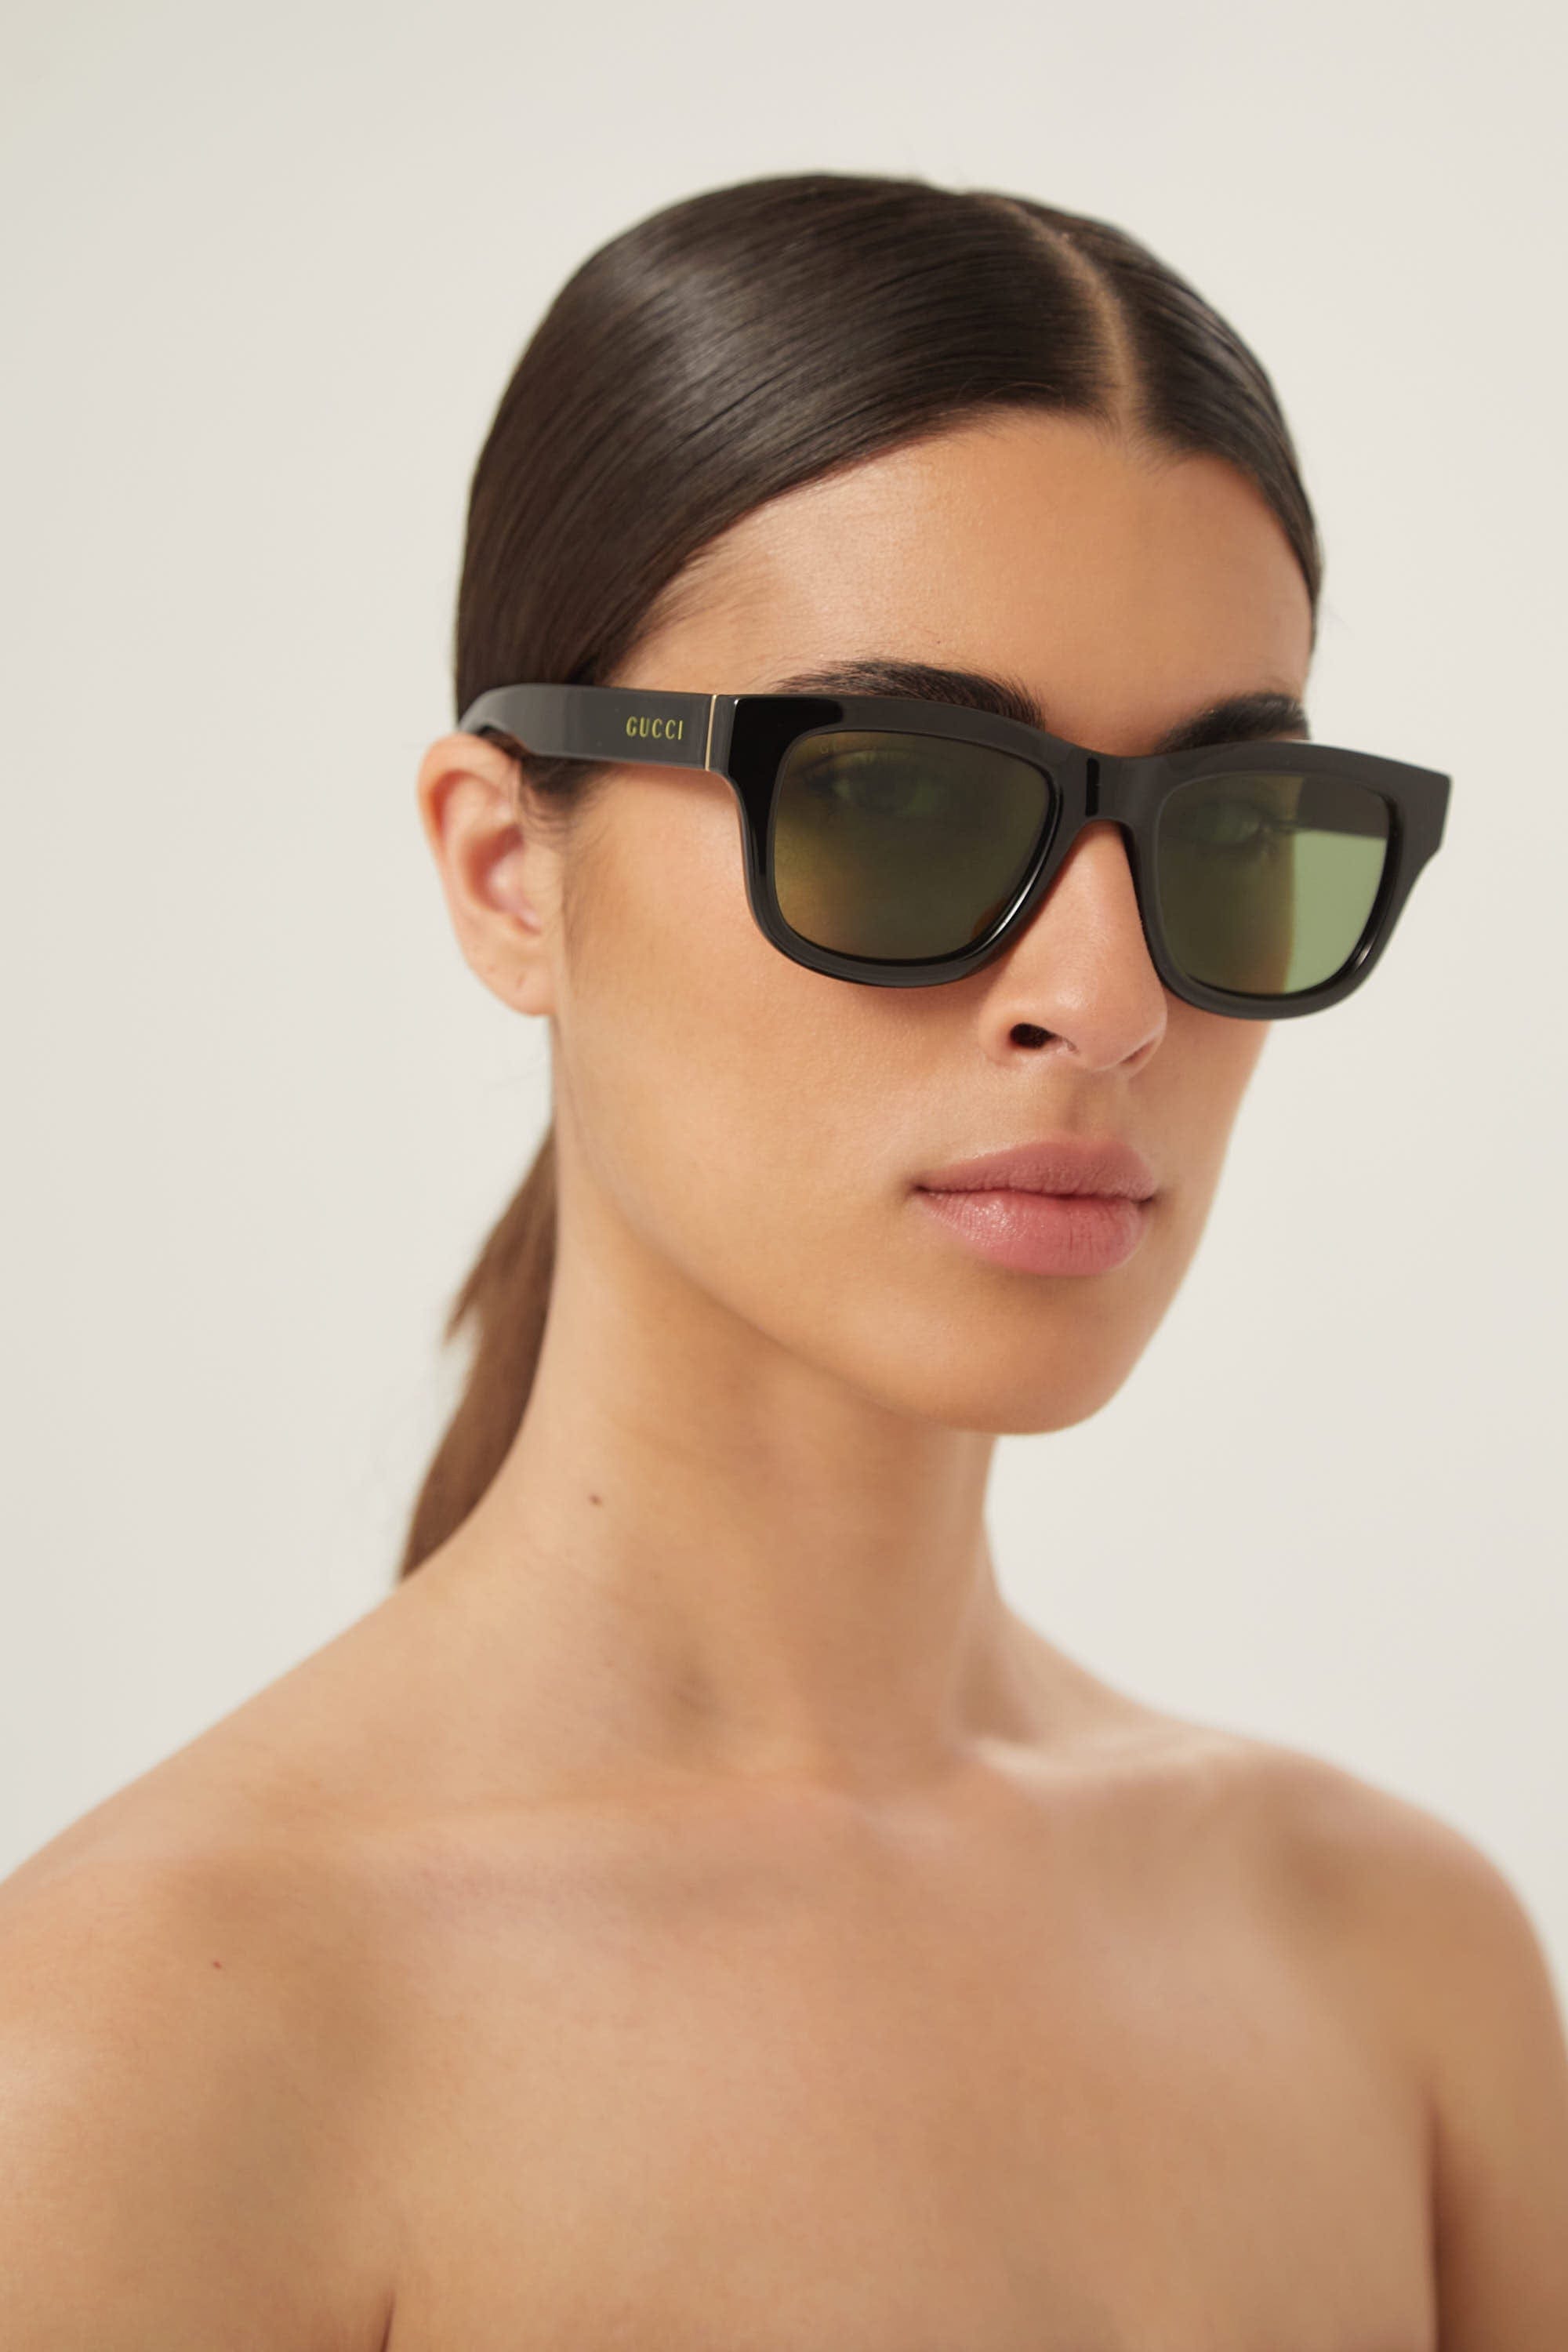 Gucci soft squared black and green sunglasses - Eyewear Club